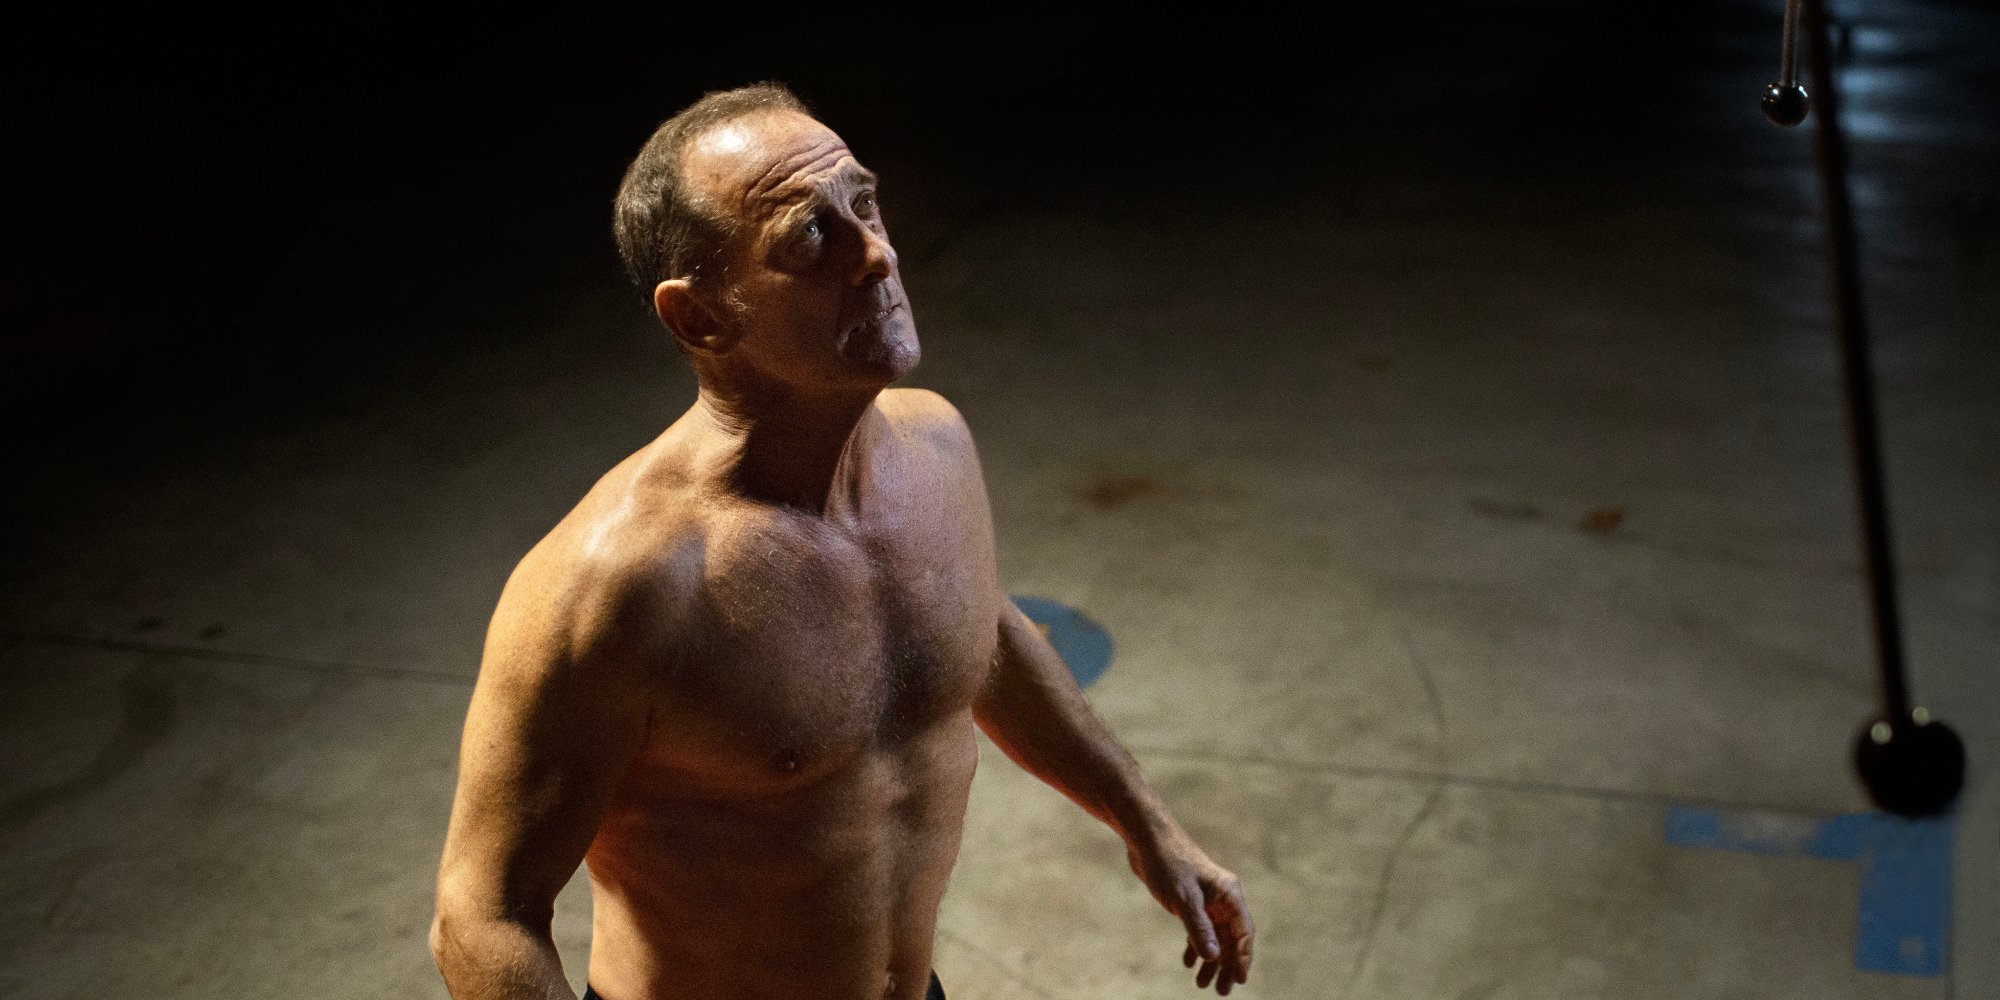 'Titane' Vincent Lindon as Vincent shirtless looking up